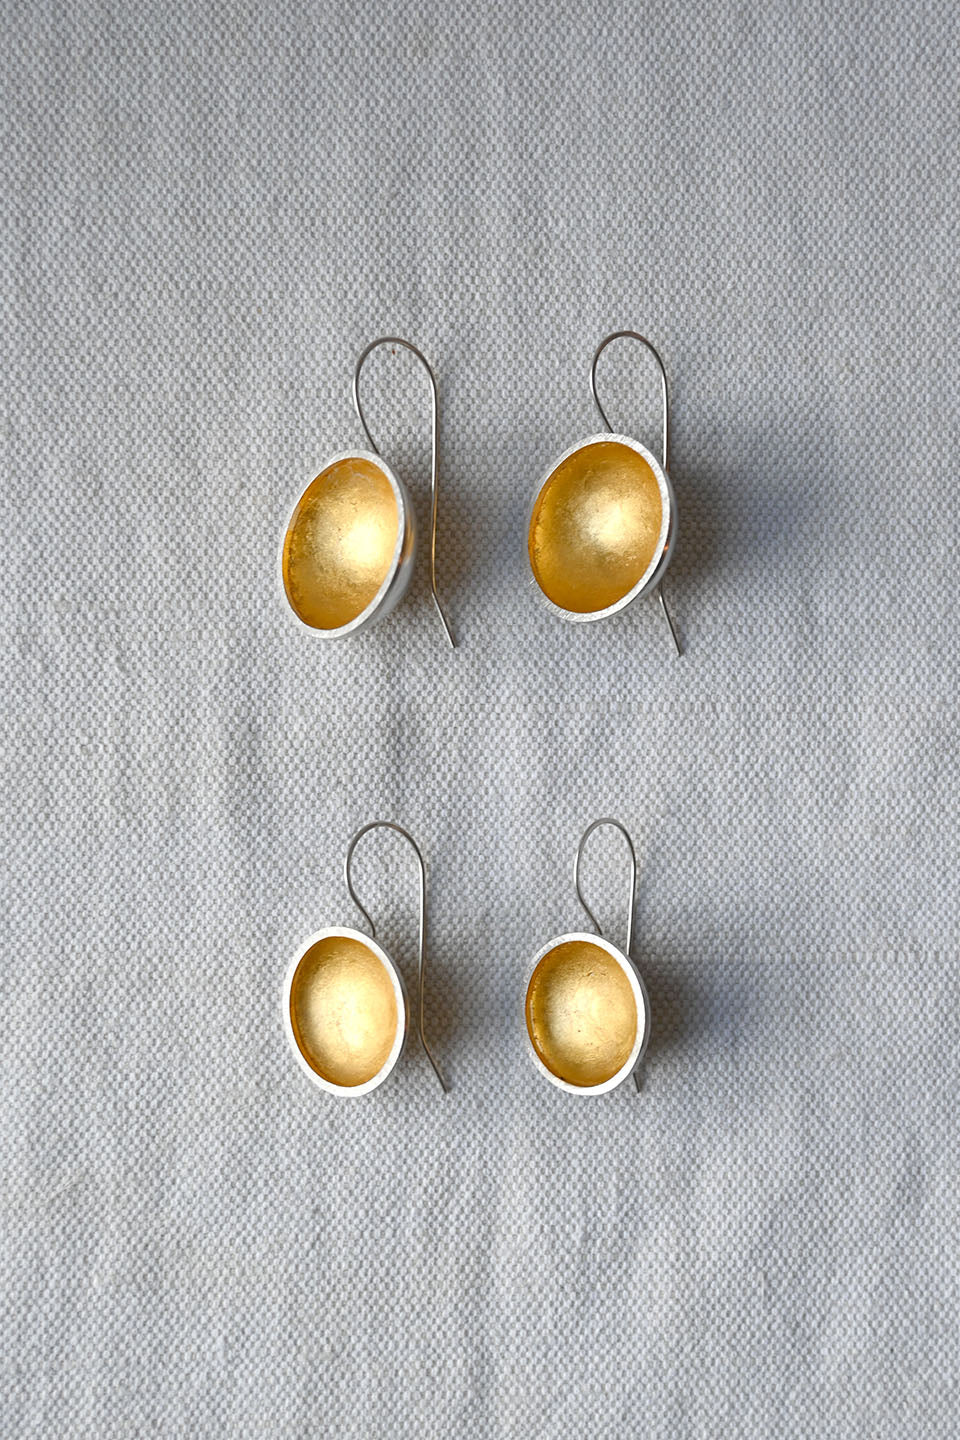 Gold Leaf Earrings Medium / Large